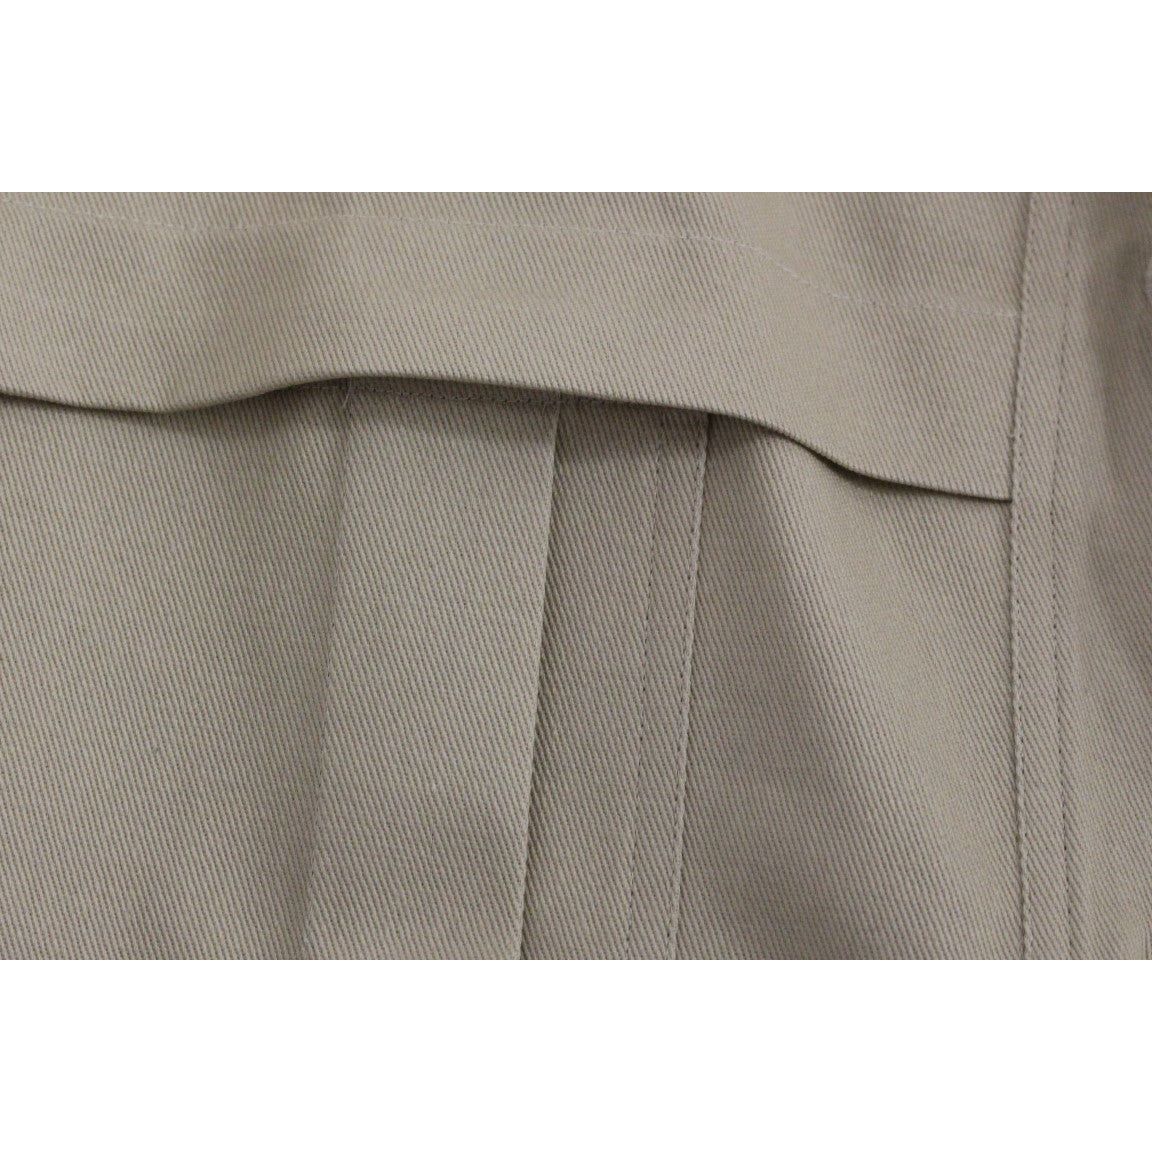 Andrea Incontri Sleeveless Beige Cotton Tank Top with Brooches beige-sleeveless-blouse-top-1 149442-beige-sleeveless-blouse-top-2-7.jpg